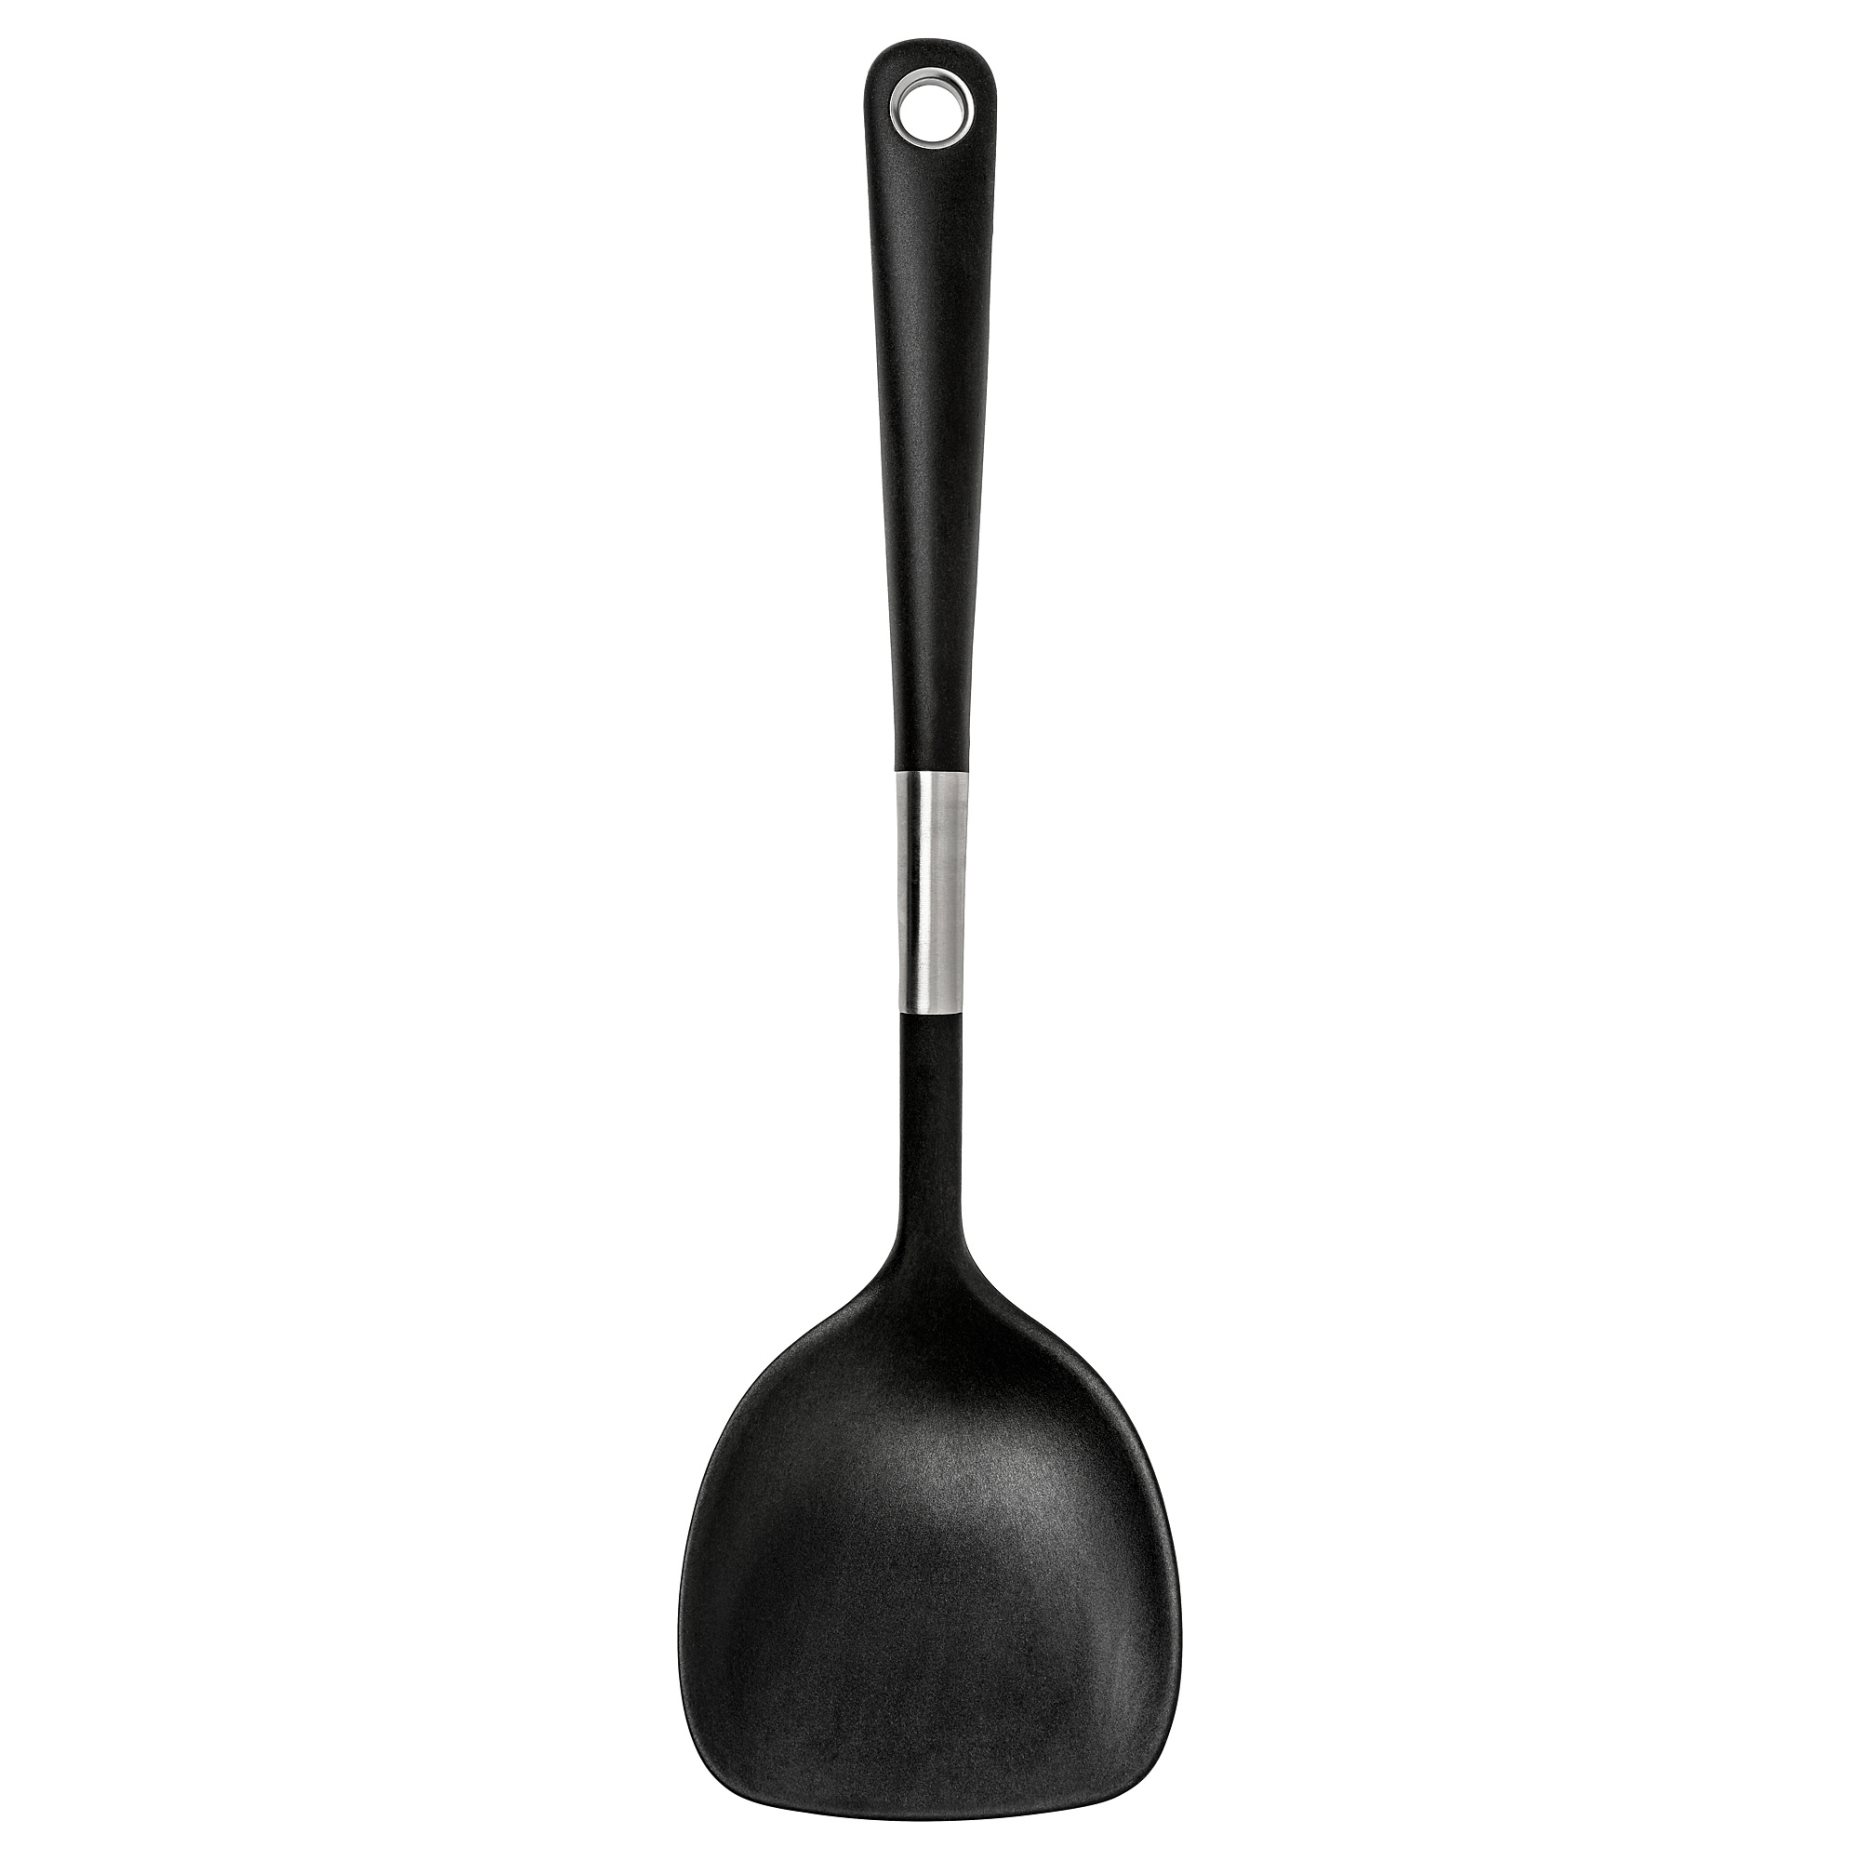 IKEA 365+, wok spatula, 501.494.66